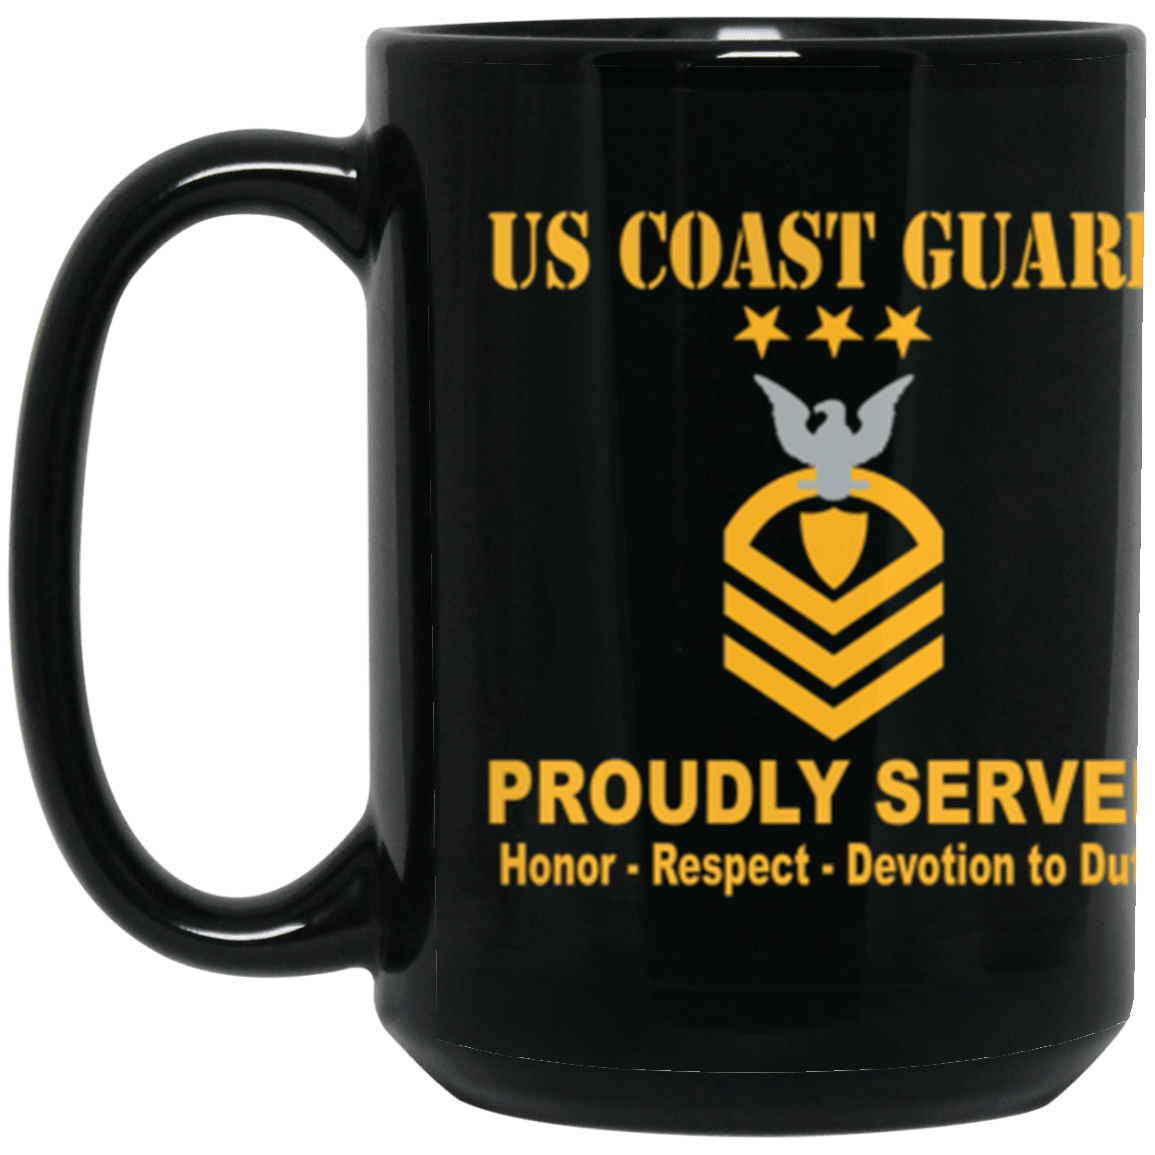 US Coast Guard E-9 Master Chief Petty Officer Of The Coast Guard E9 MCPOC Chief Petty Officer Proudly Served Core Values 15 oz. Black Mug-Drinkware-Veterans Nation